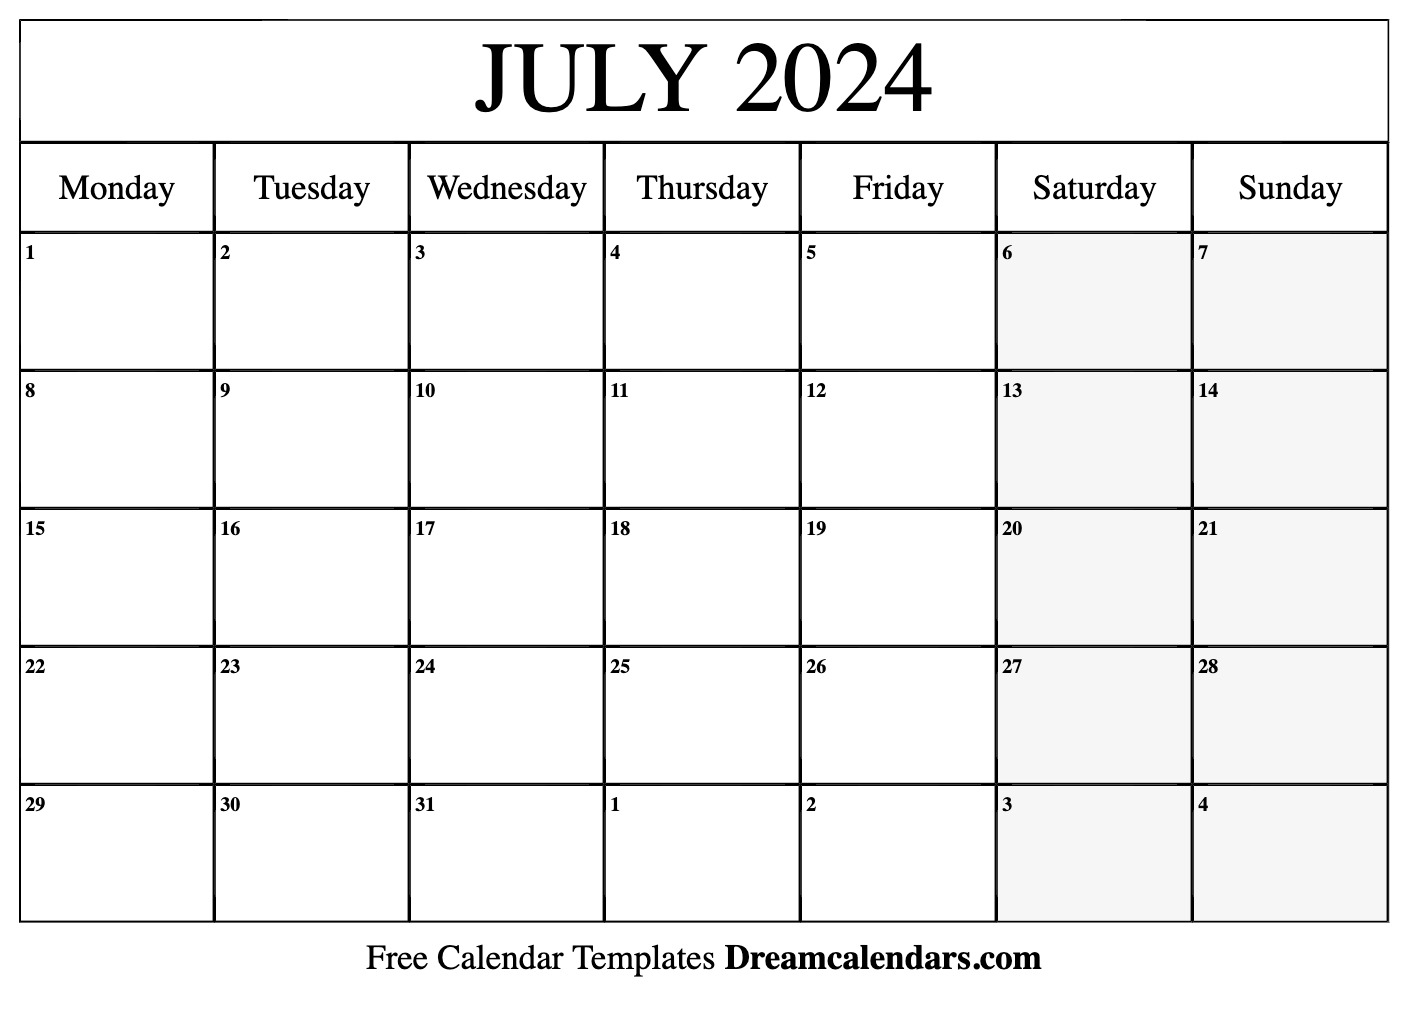 july-2024-calendar-free-blank-printable-with-holidays